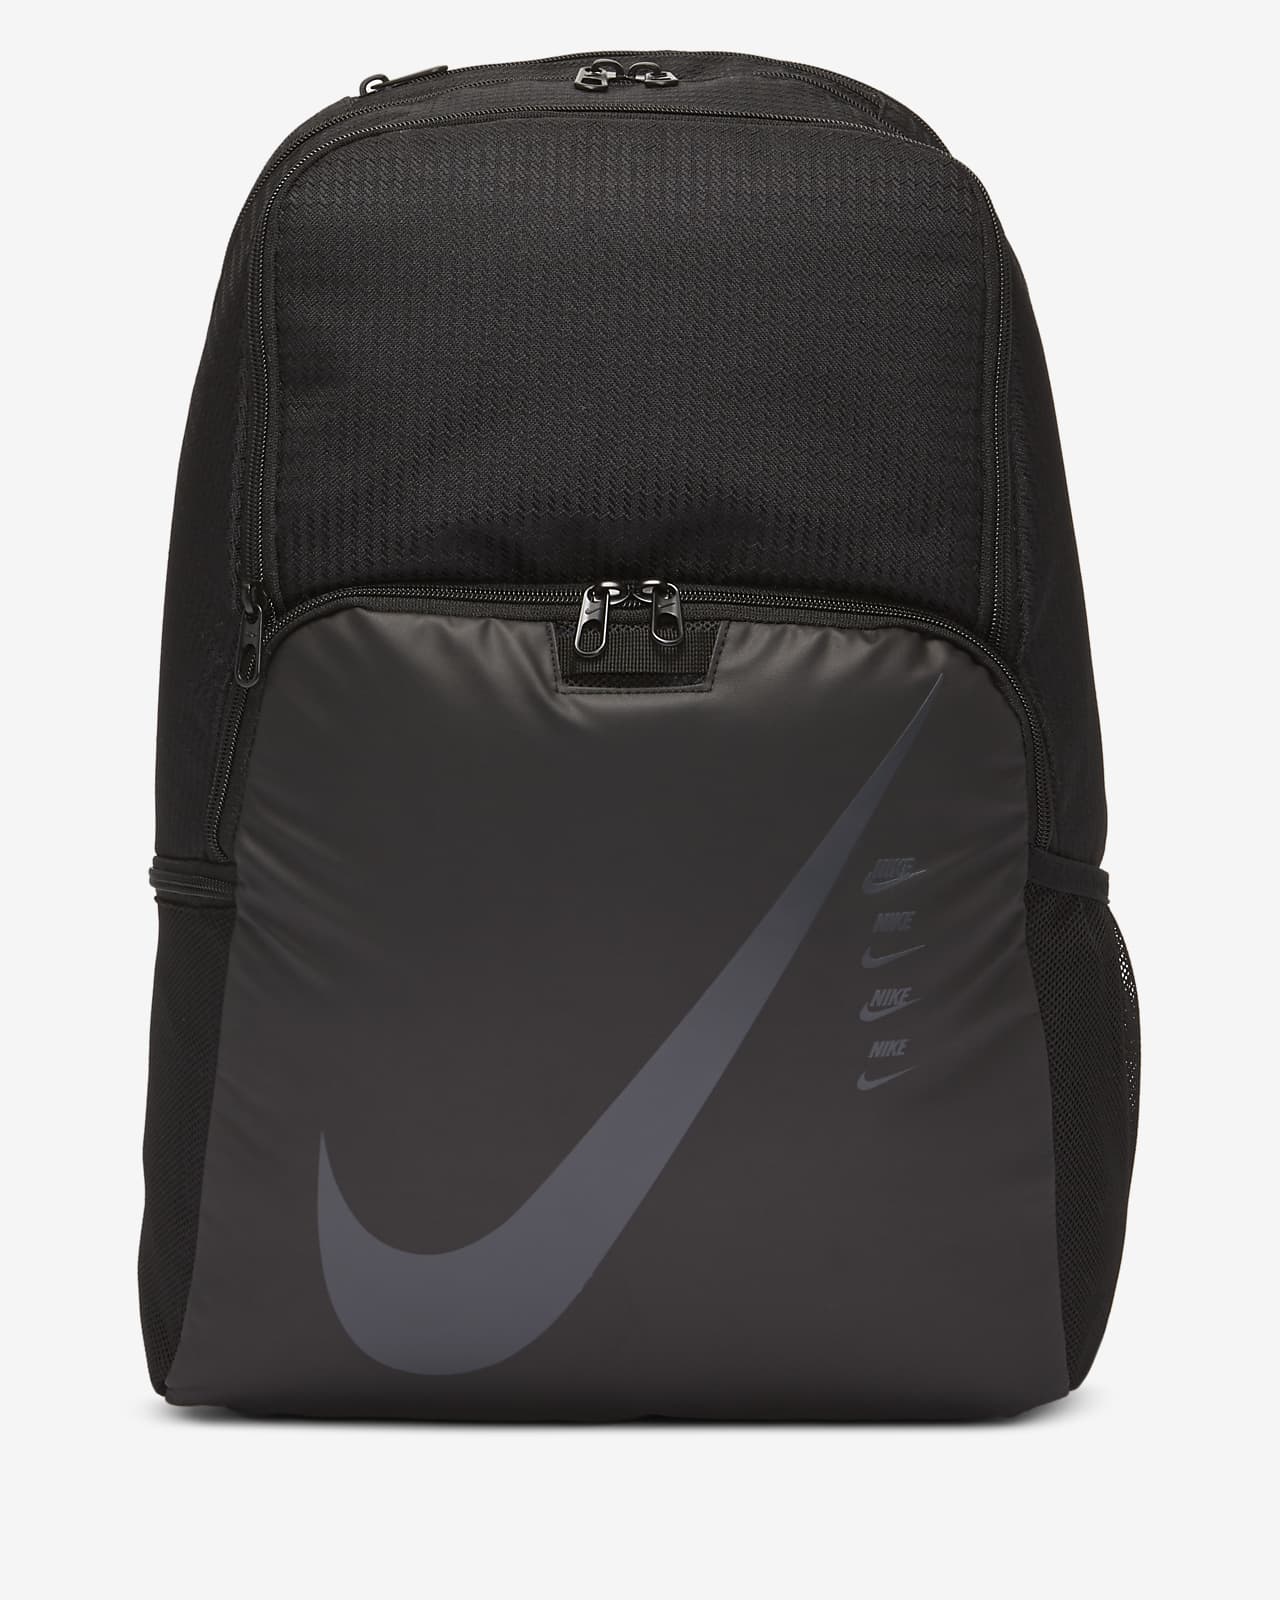 nike training brasilia 9.0 holdall bag in black